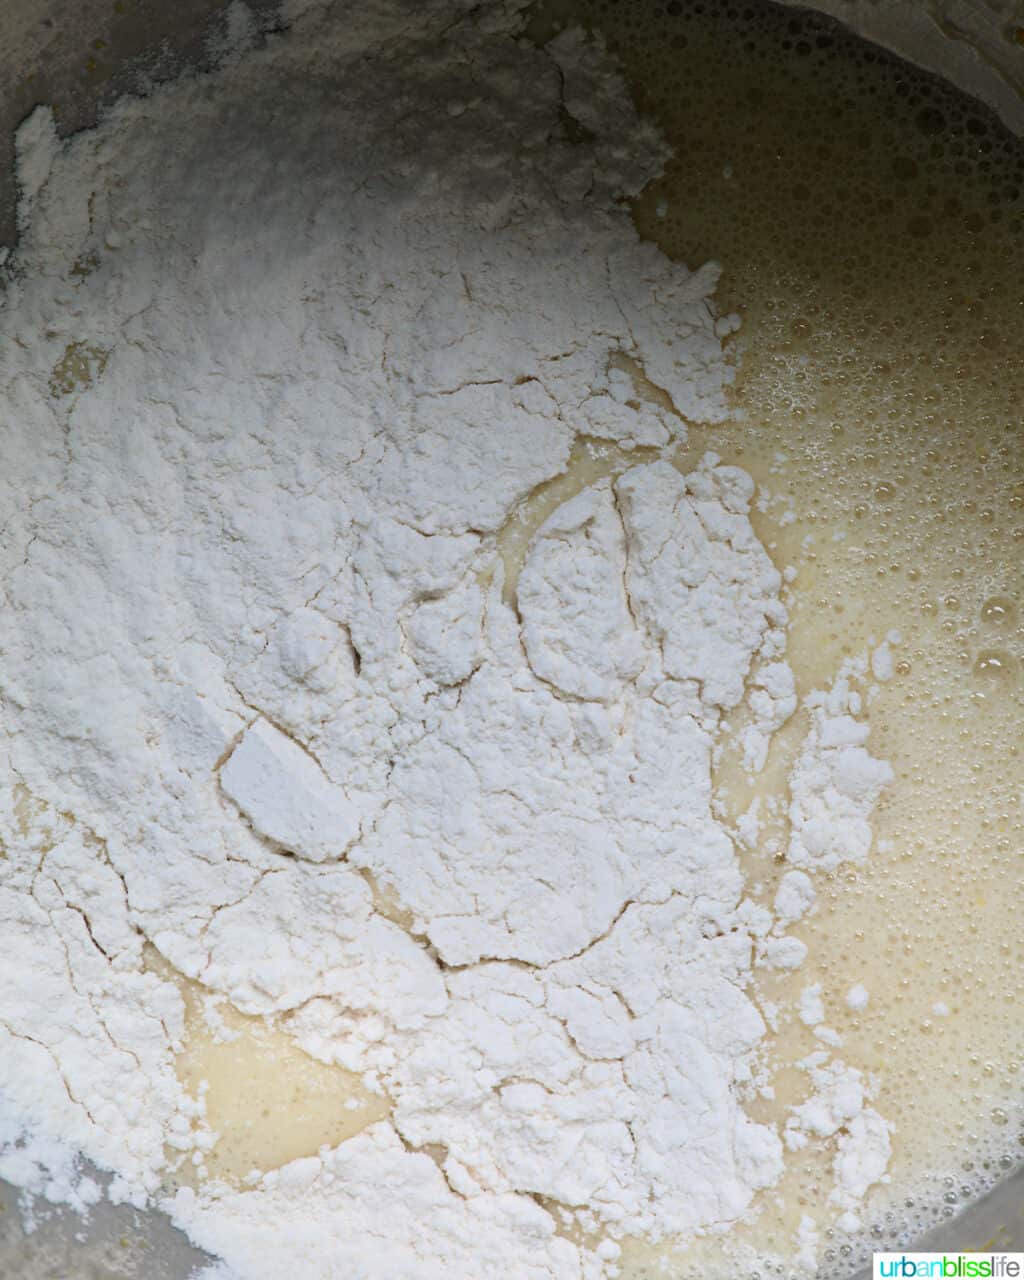 adding flour to wet ingredients to make muffins.